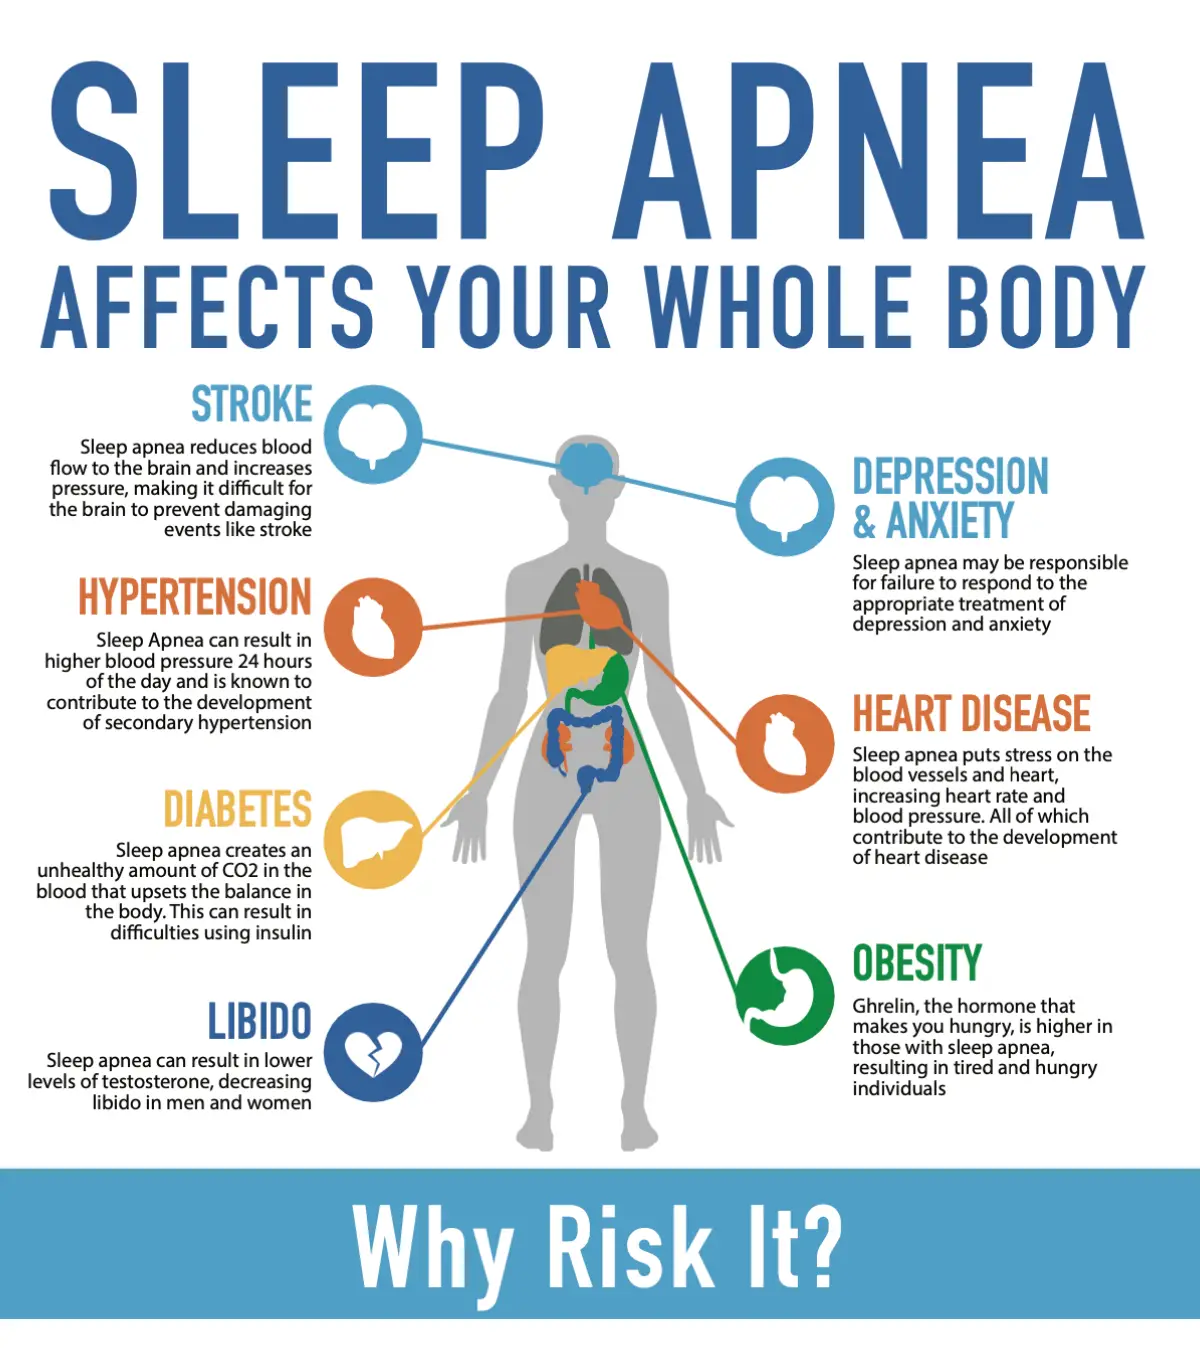 Sleep apnea affects your whole body